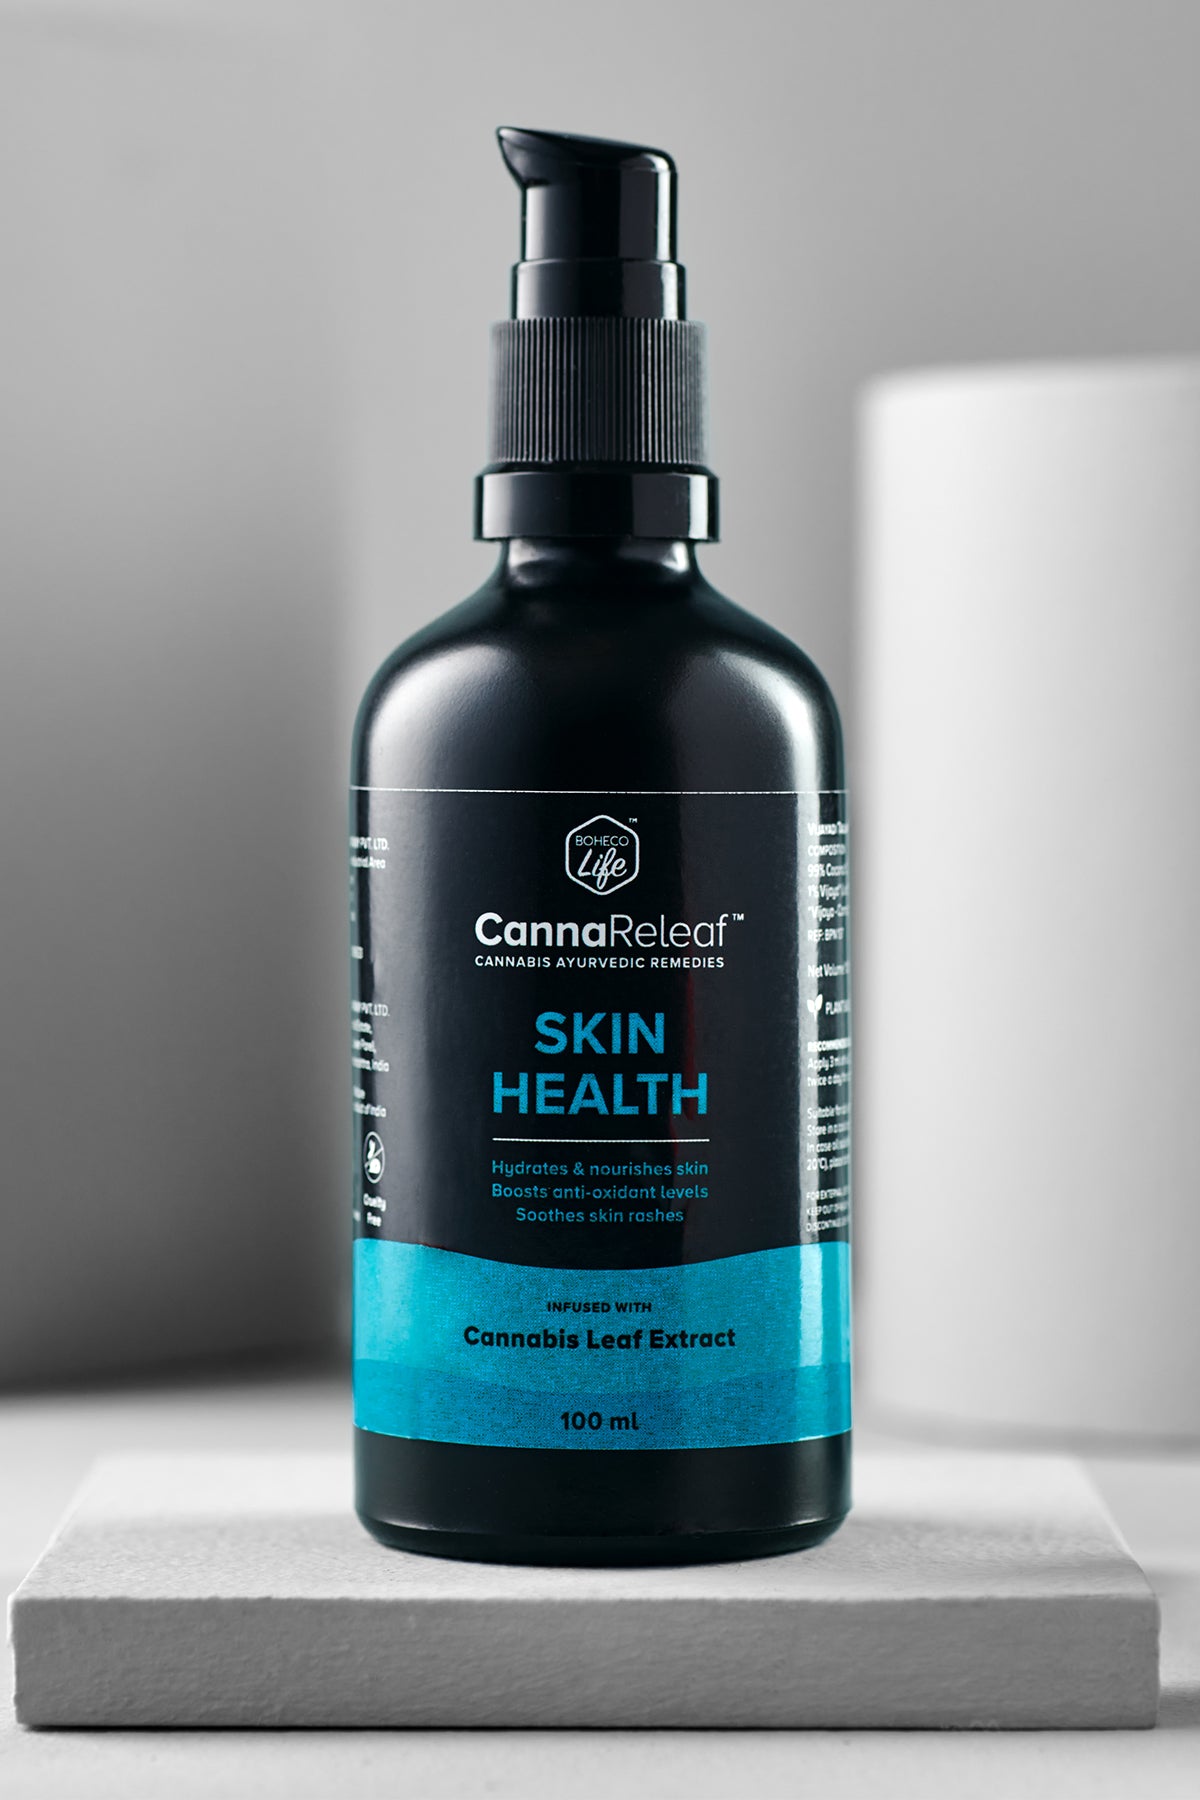 CannaReleaf Skin Health CBD Oil